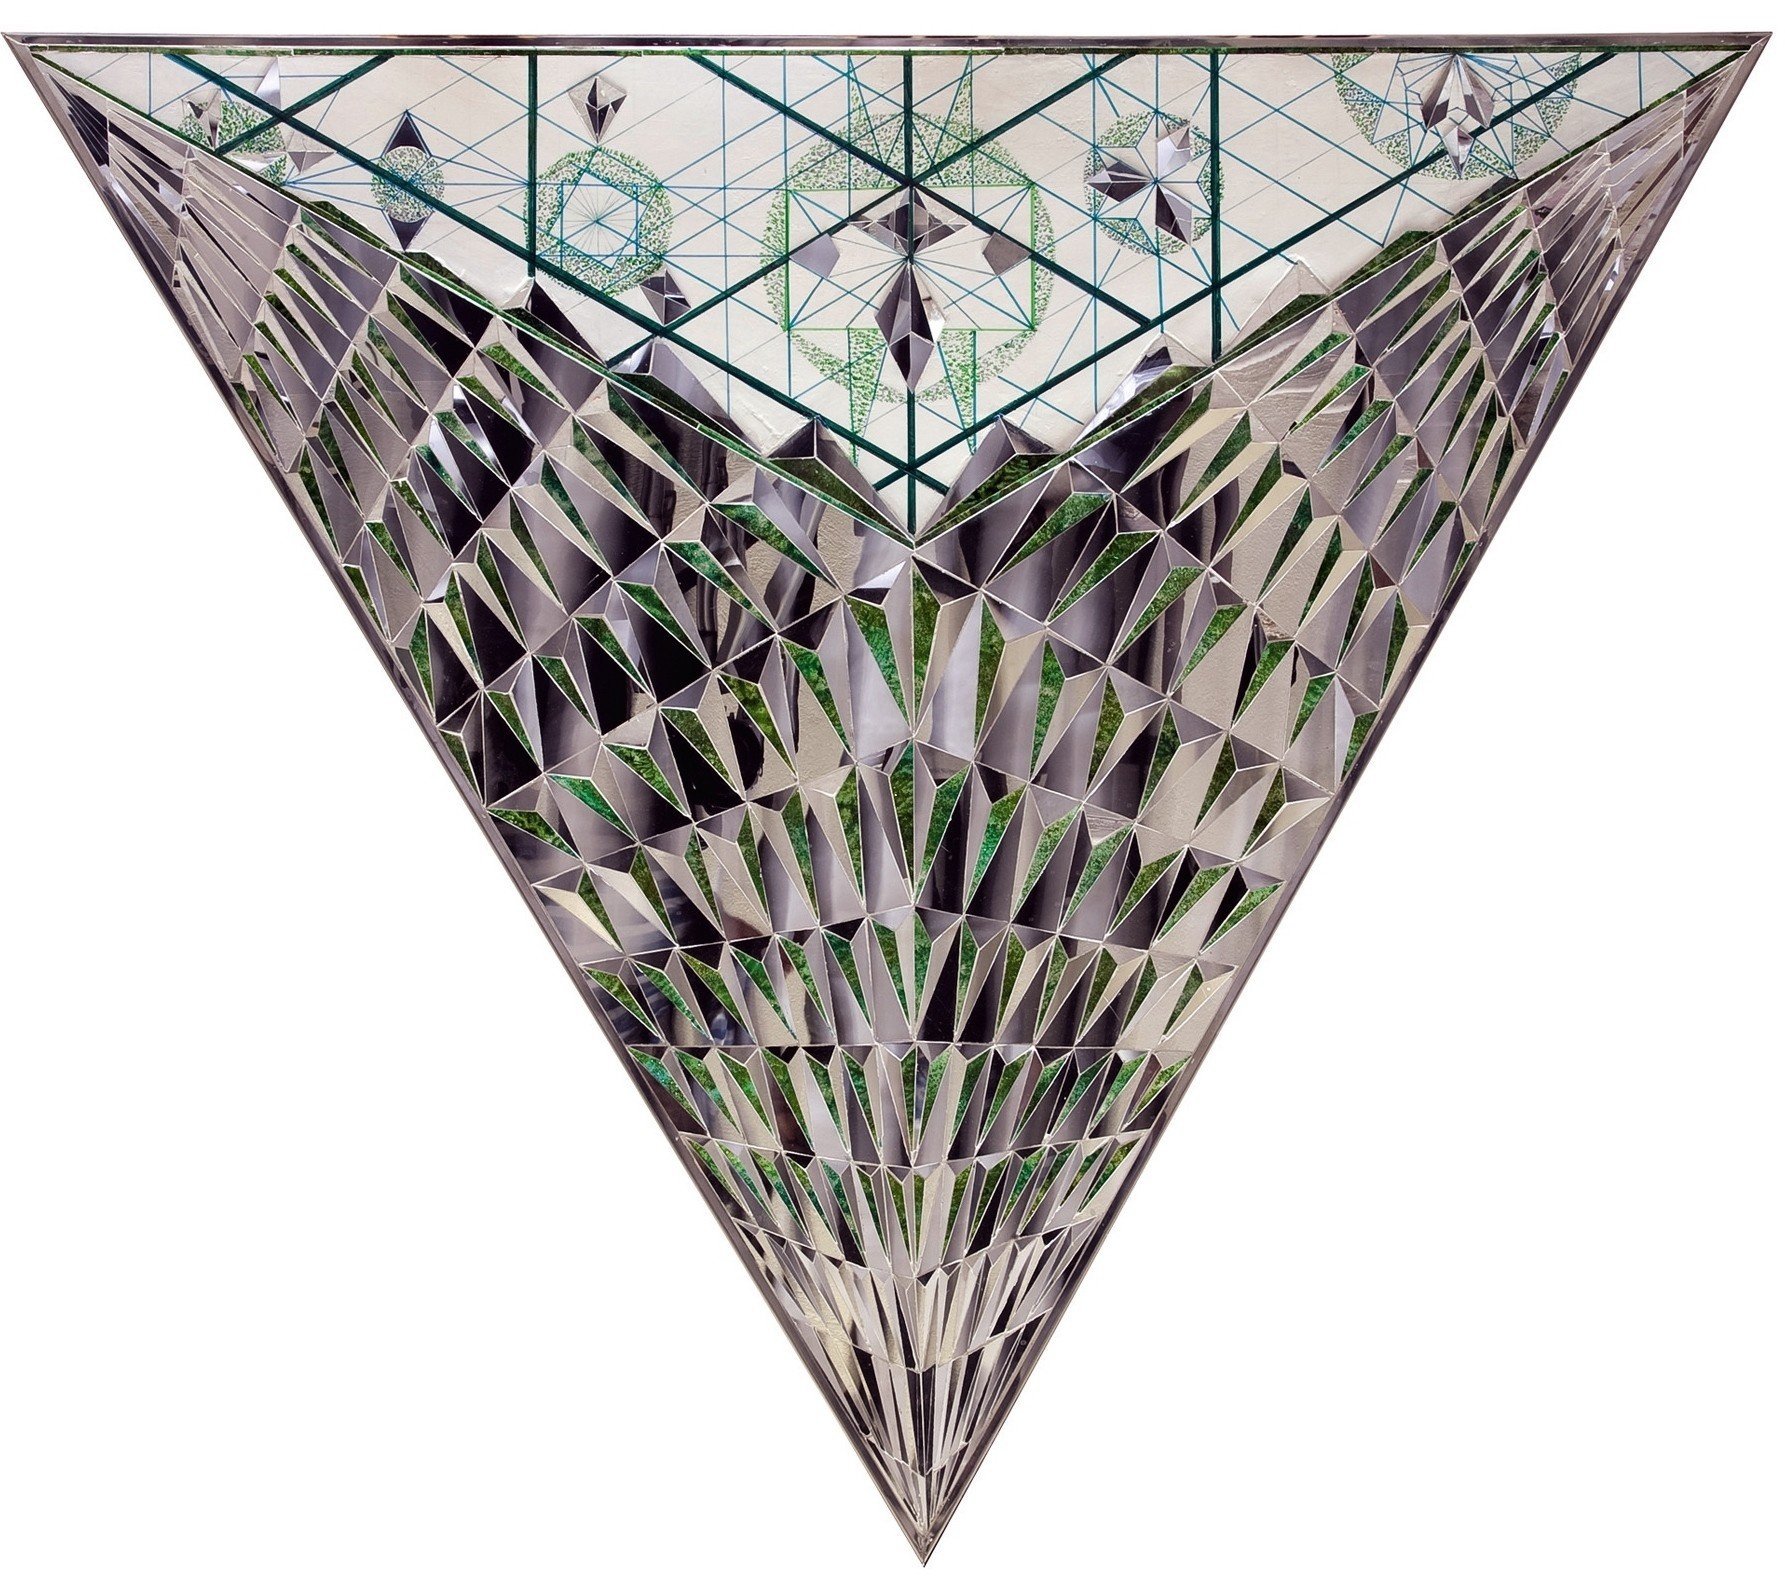 Monir Farmanfarmaian, Iranian Triangle of Hope, sold at auction for 137,500 GBP (HK$1.46 million)